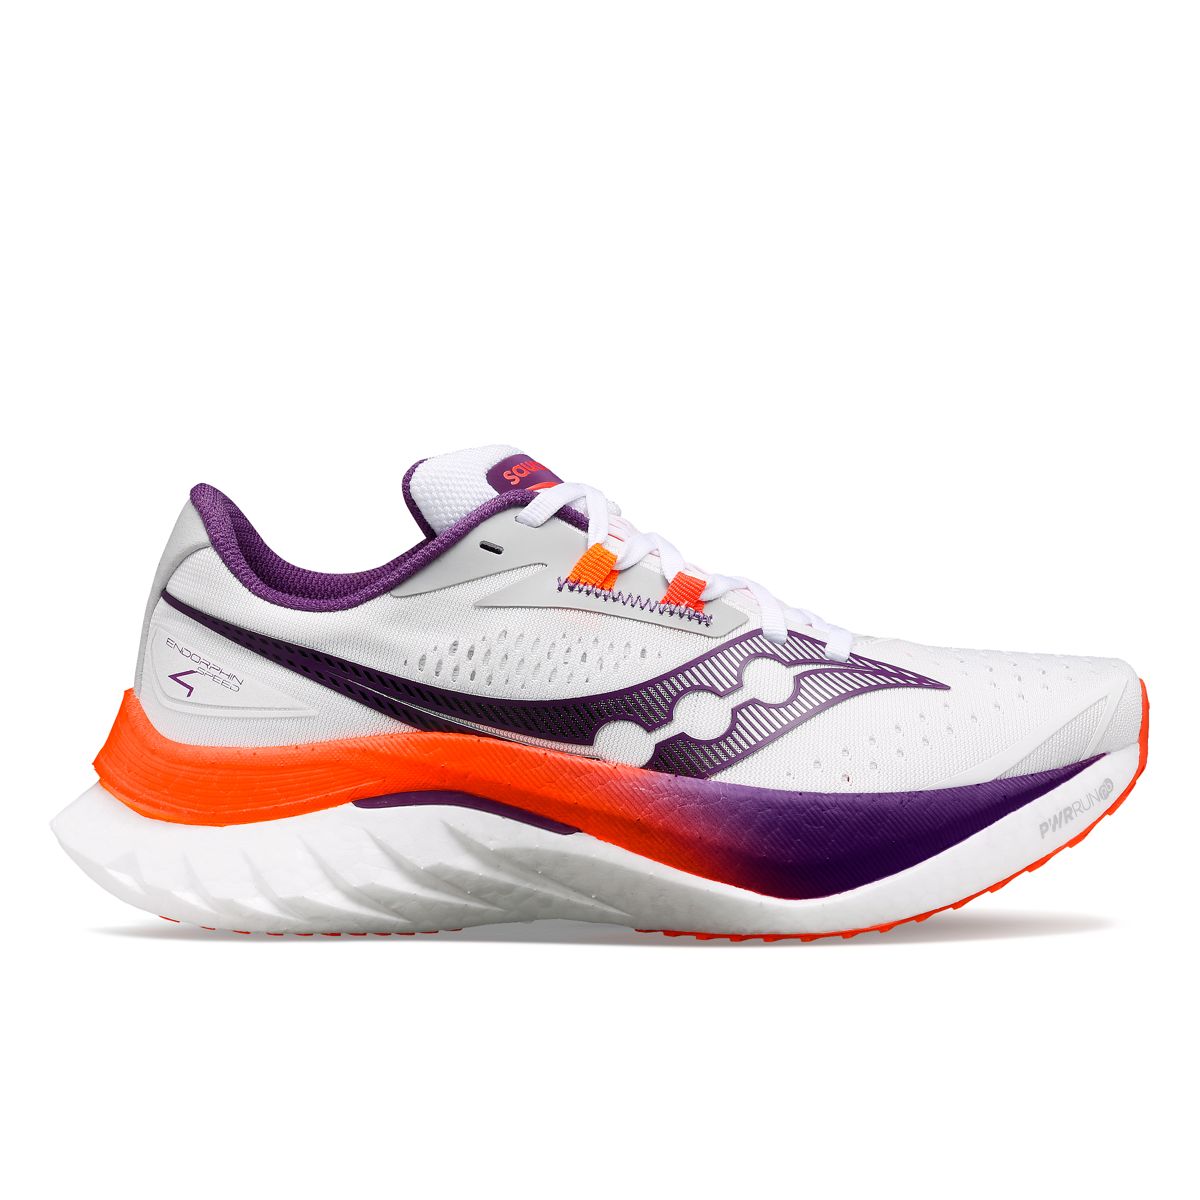 Women's Running Shoes: Shop Cushioned, Light u0026 Fast | Saucony